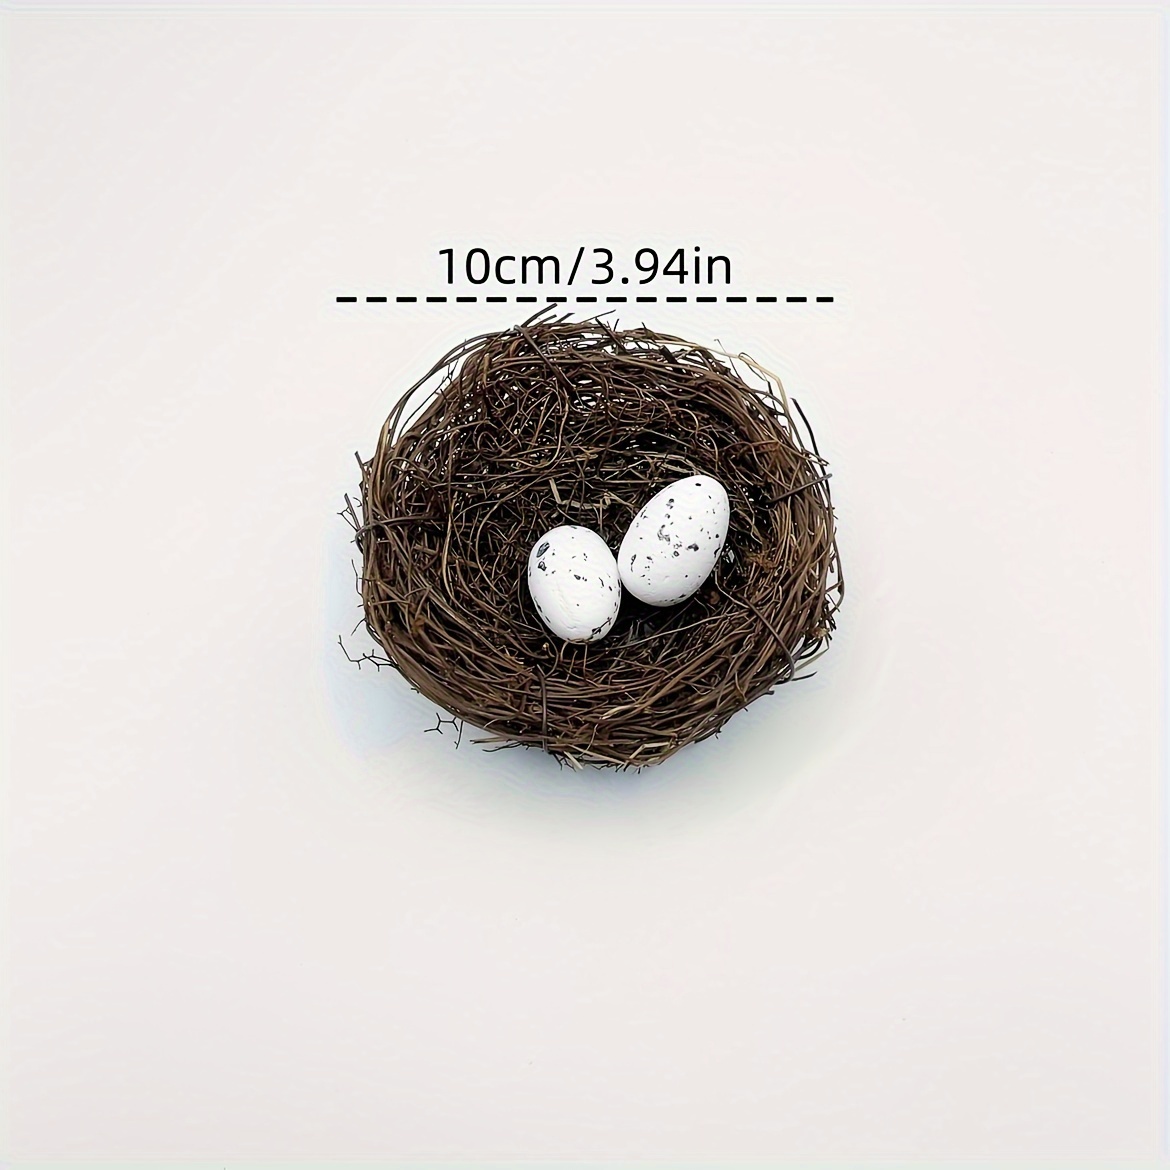 Woven Nest With Three Bird Eggs 4”